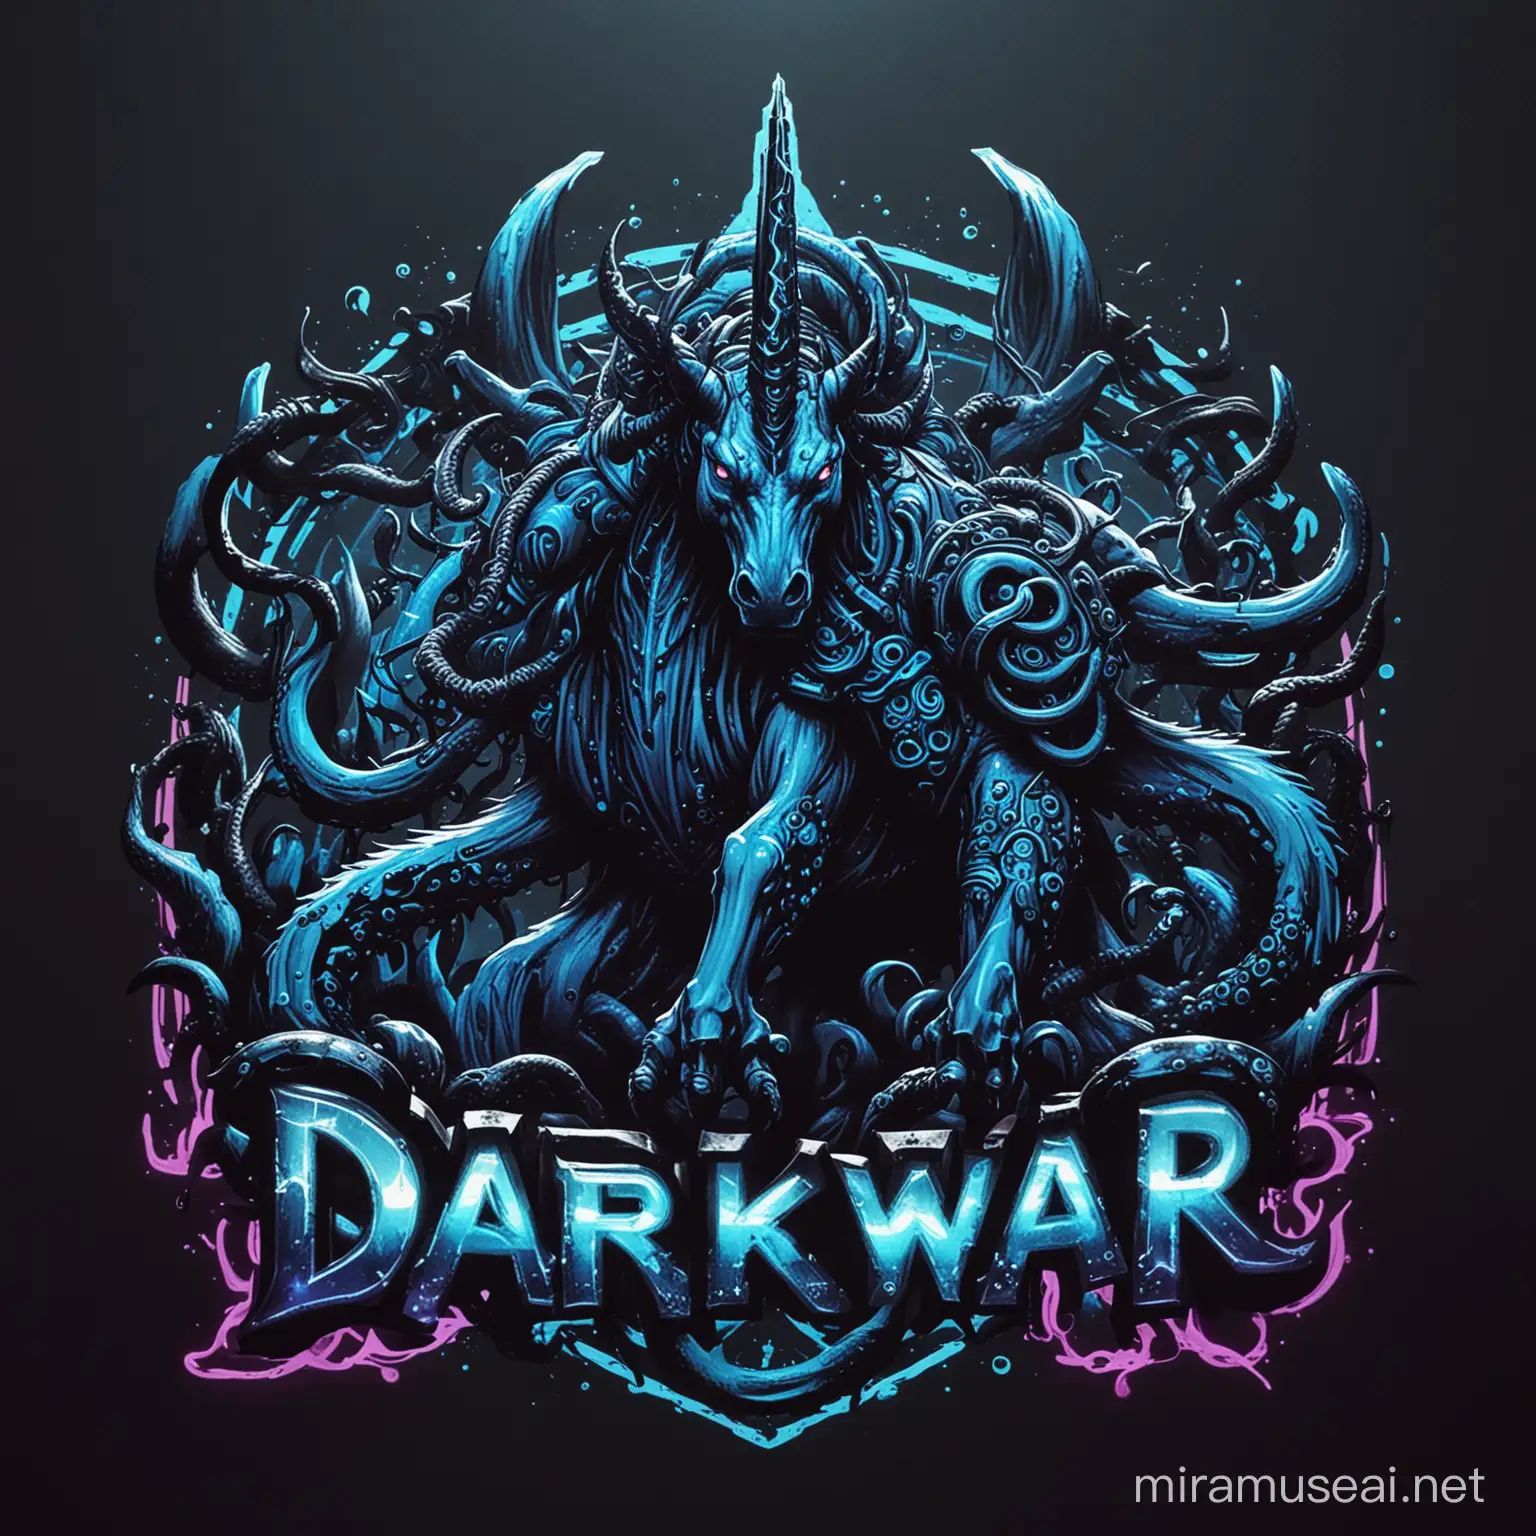 Dark war unicorn logo with neon blue collors battleling giant octopuss

